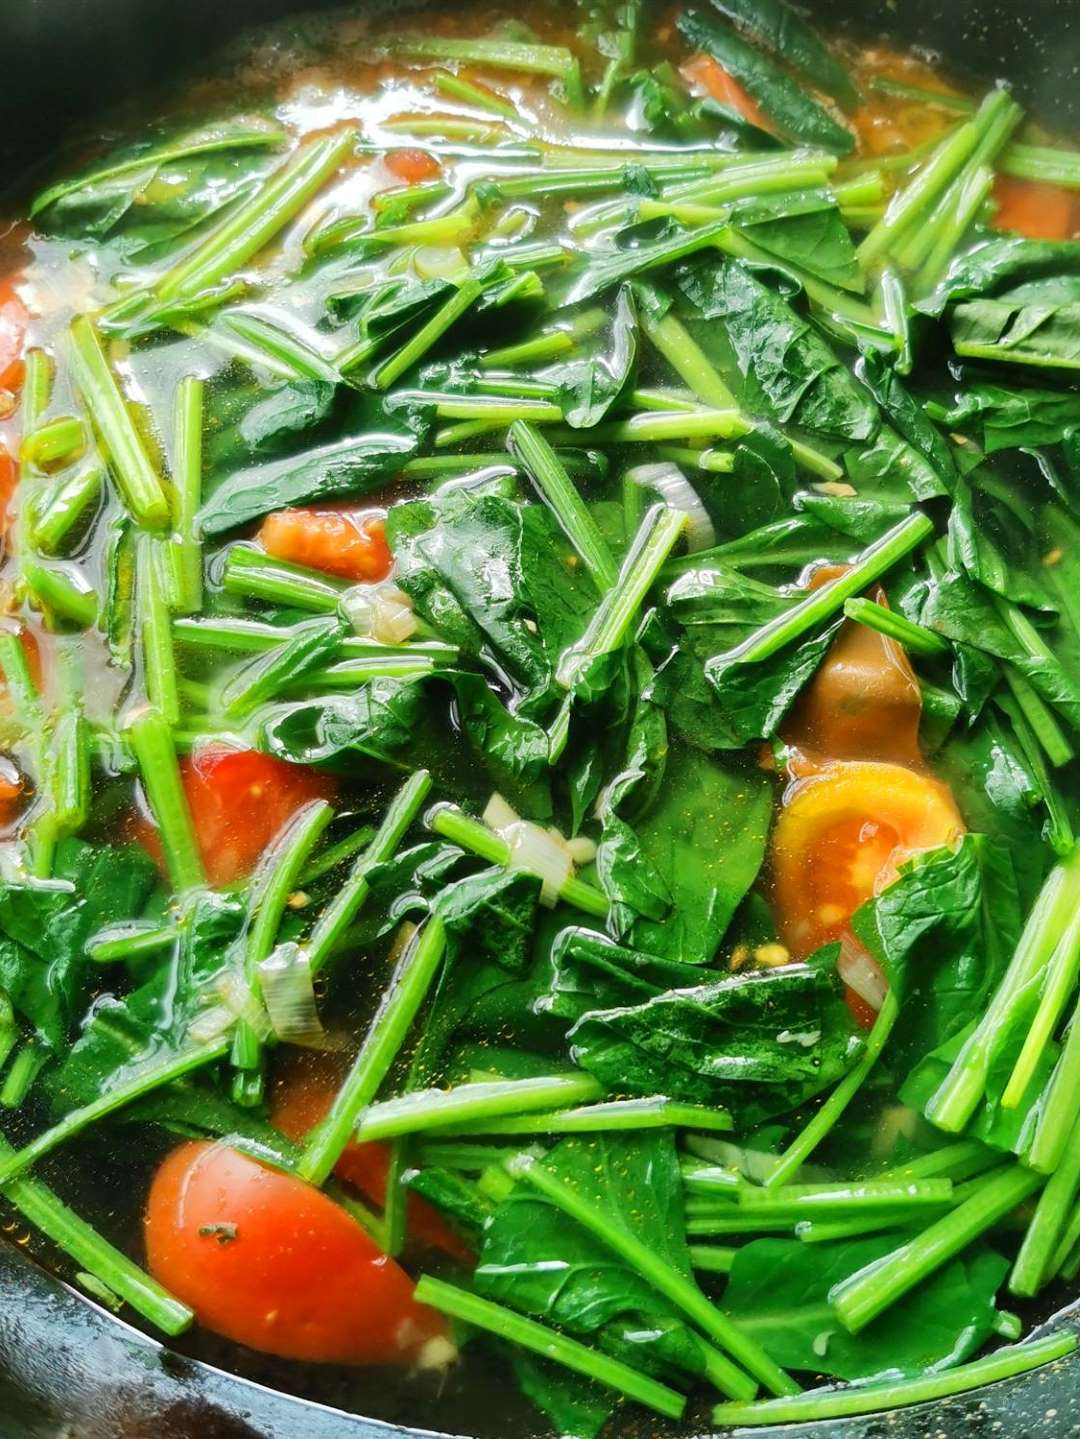 Spinach Tomato And Egg Soup Recipe3